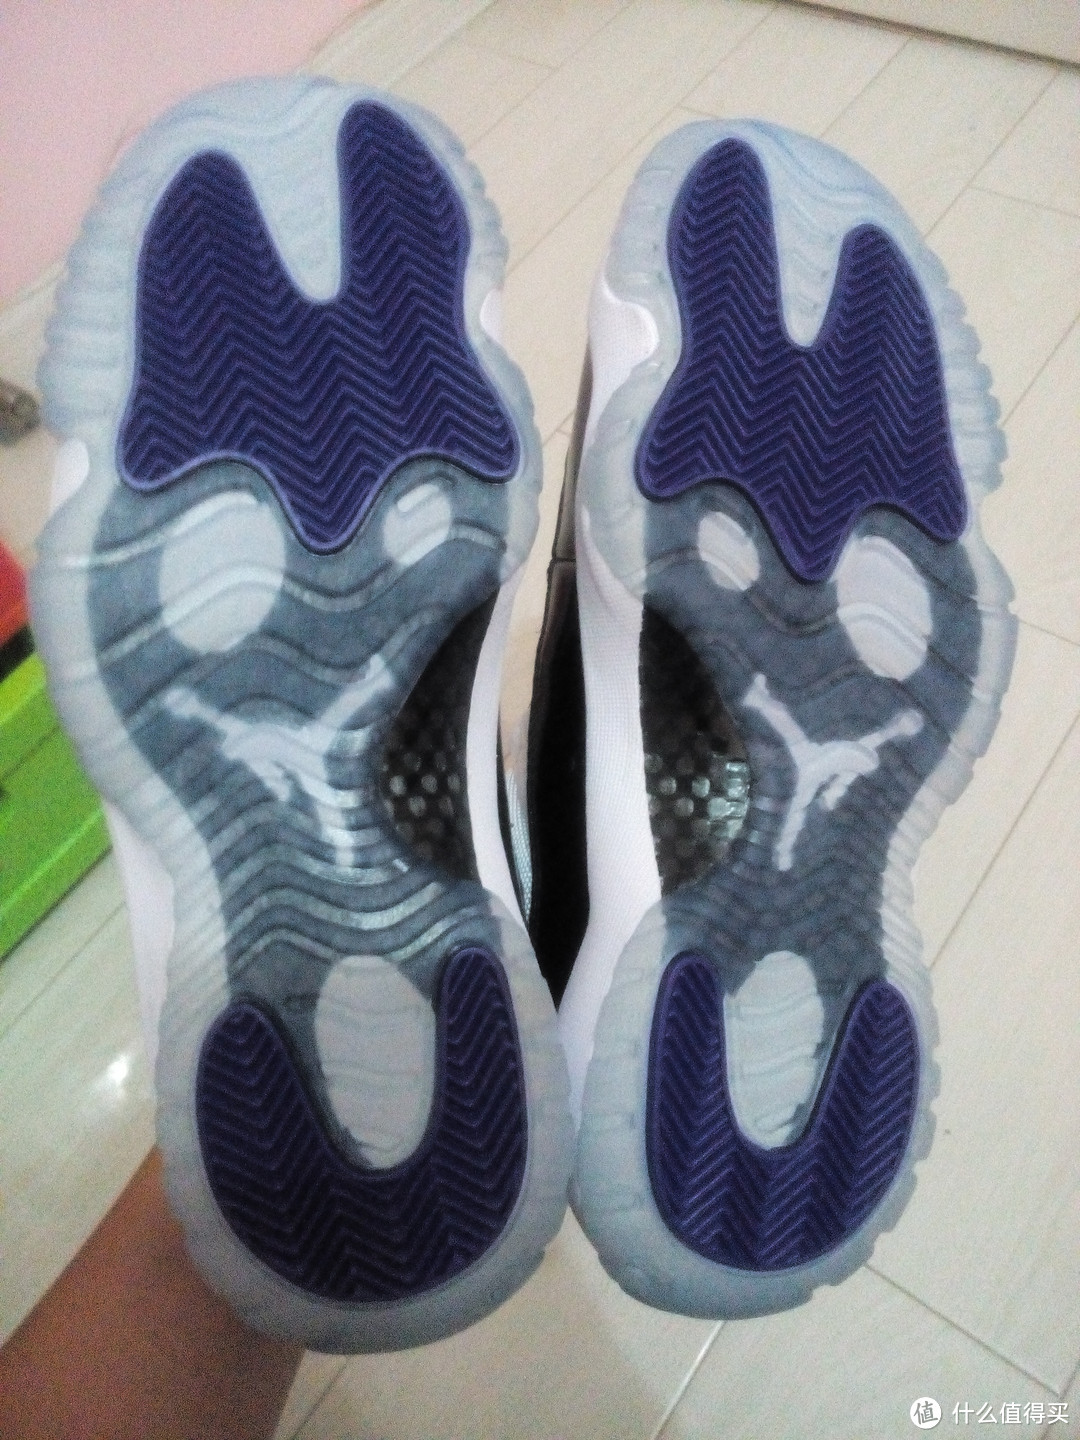 Nike 耐克 Air Foamposite Pro 篮球球+ air Jordan XI LOW concord 篮球鞋